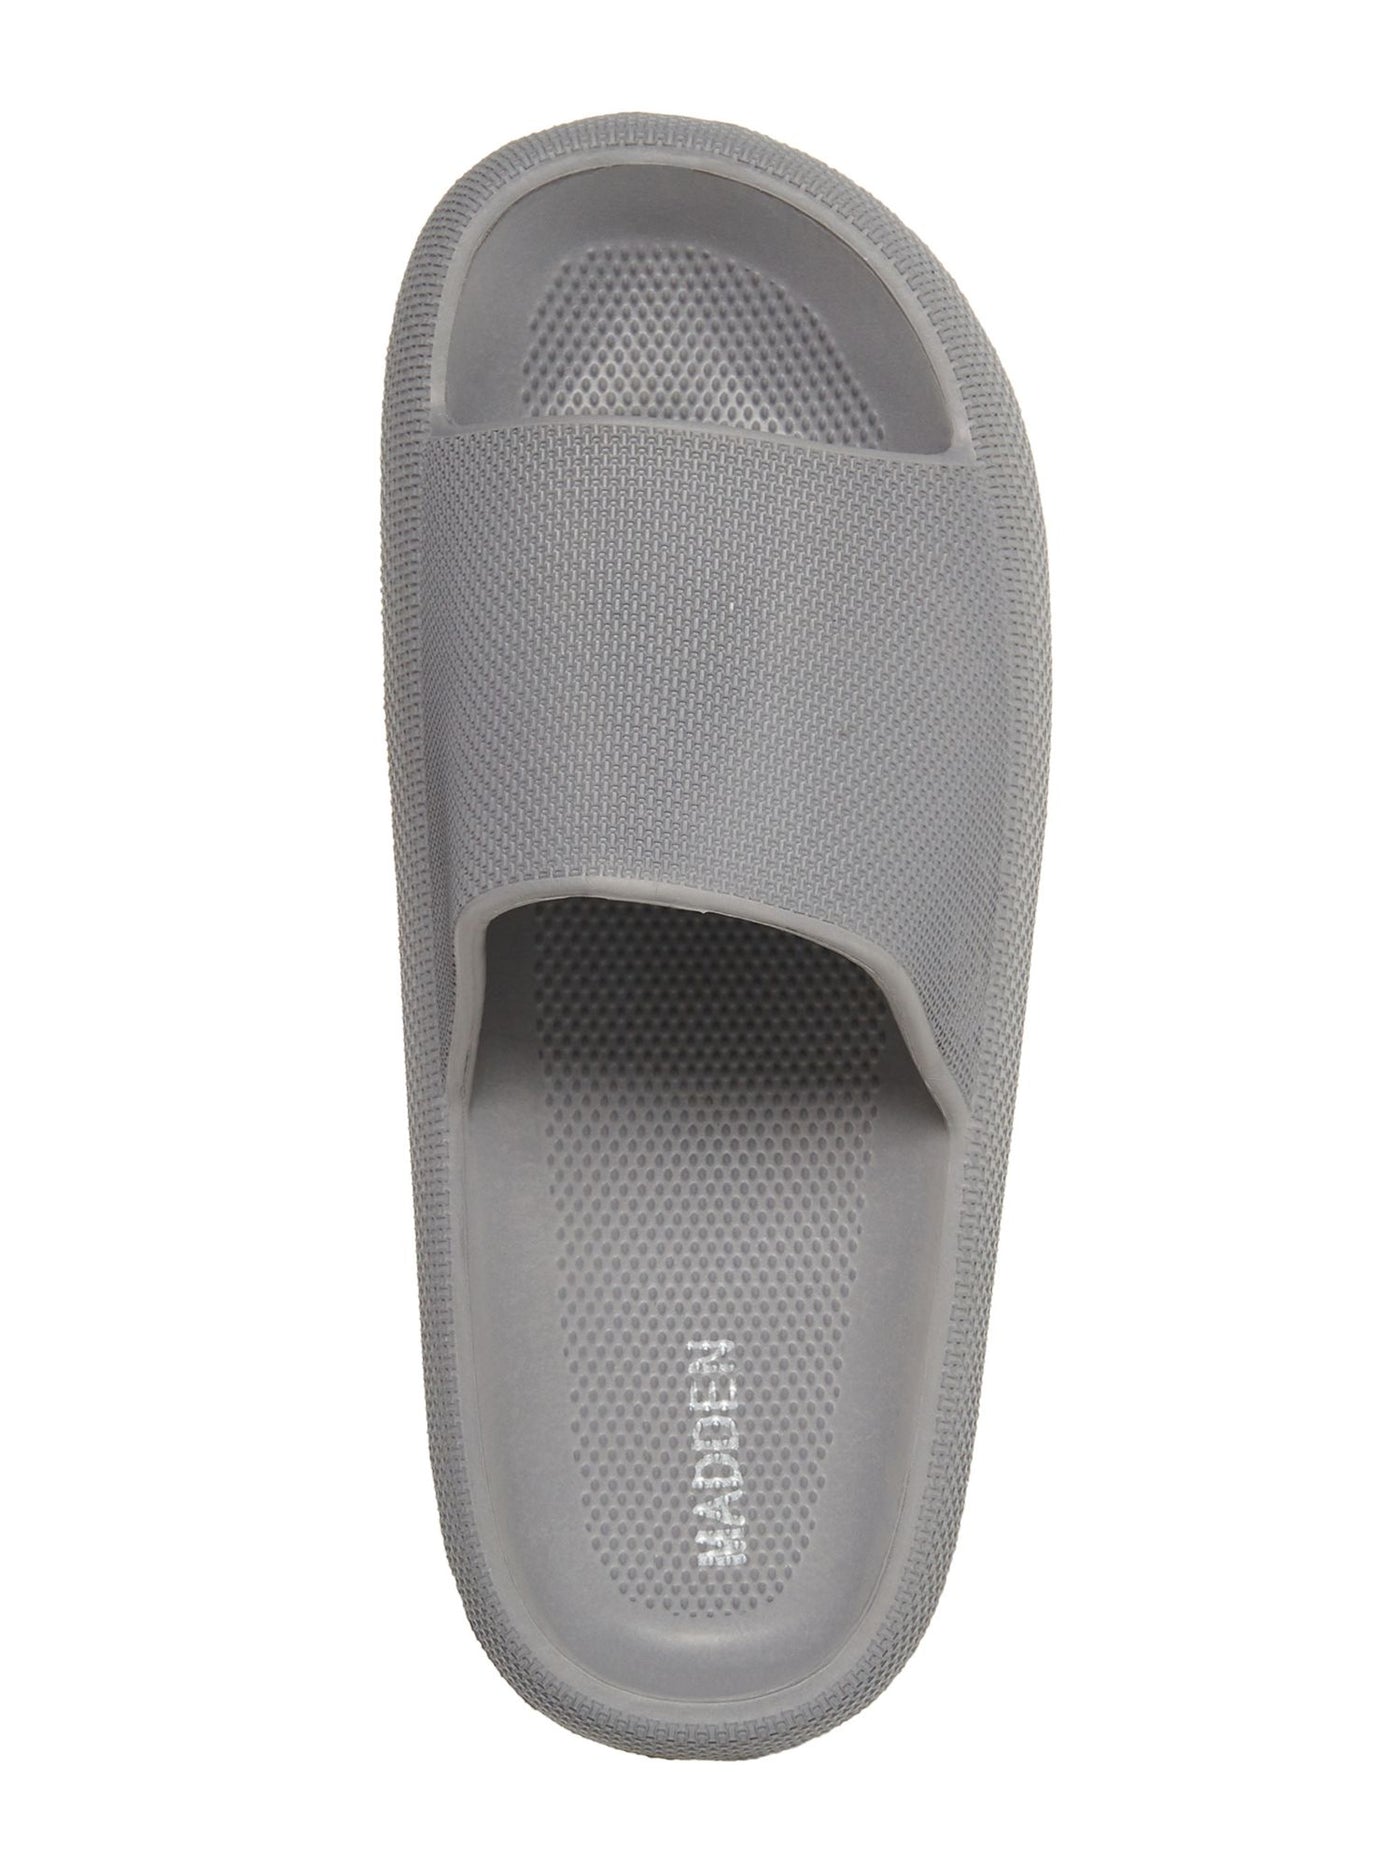 MADDEN Mens Gray Comfort Lightweight Breathable Jaxxed Round Toe Slip On Slide Sandals Shoes 8